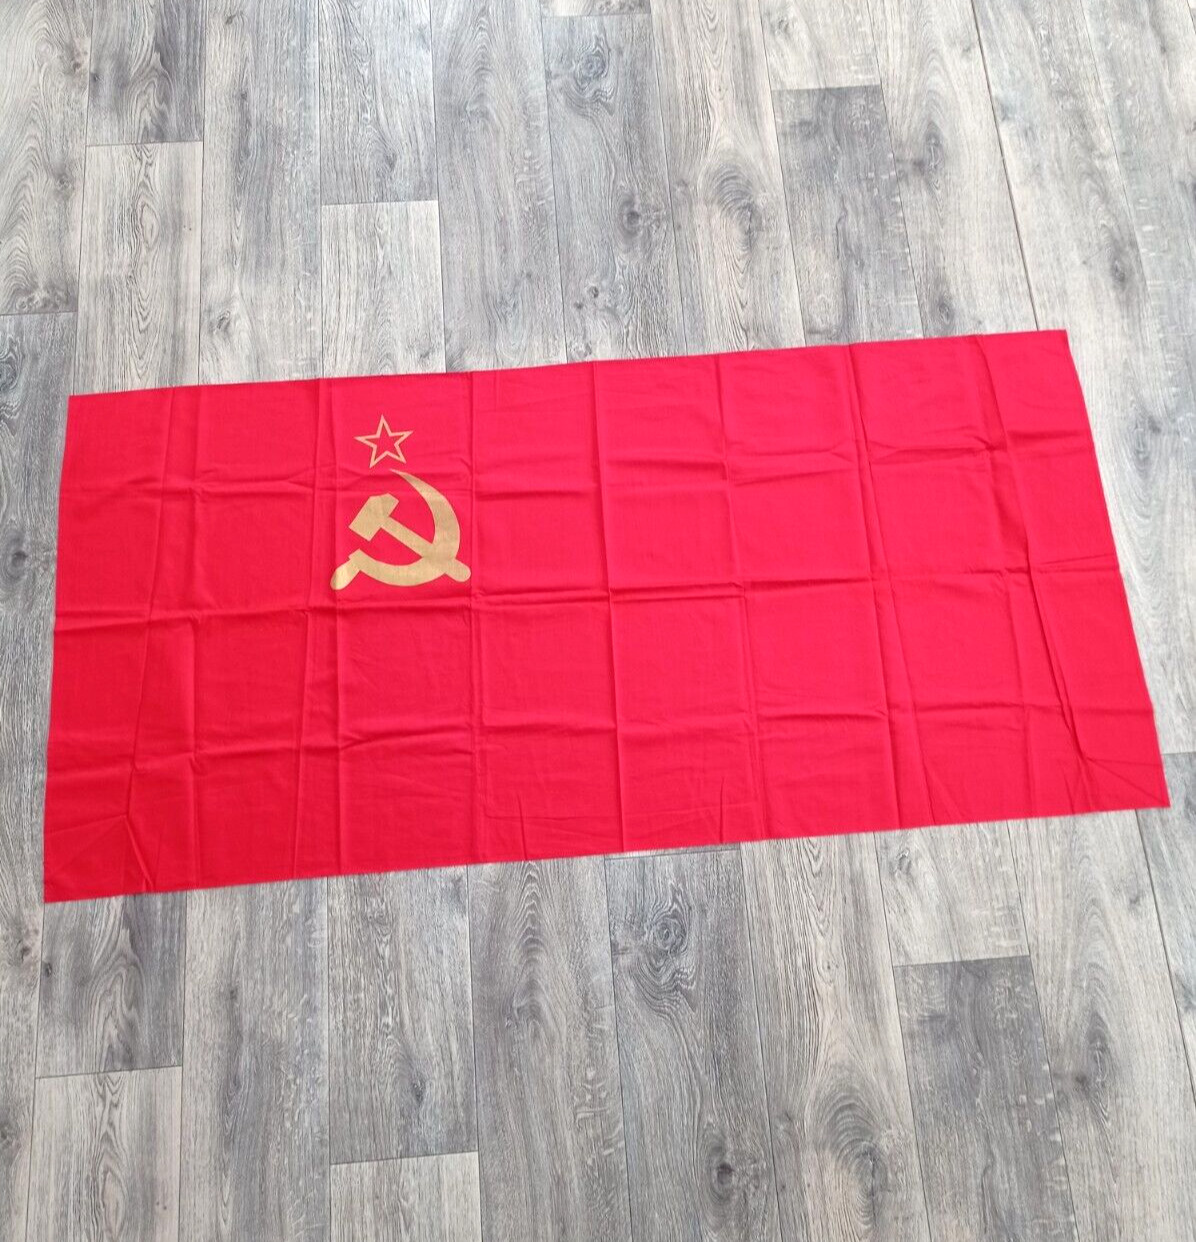 Rare original vintage flag of the USSR. Soviet Union era. Communist flag.